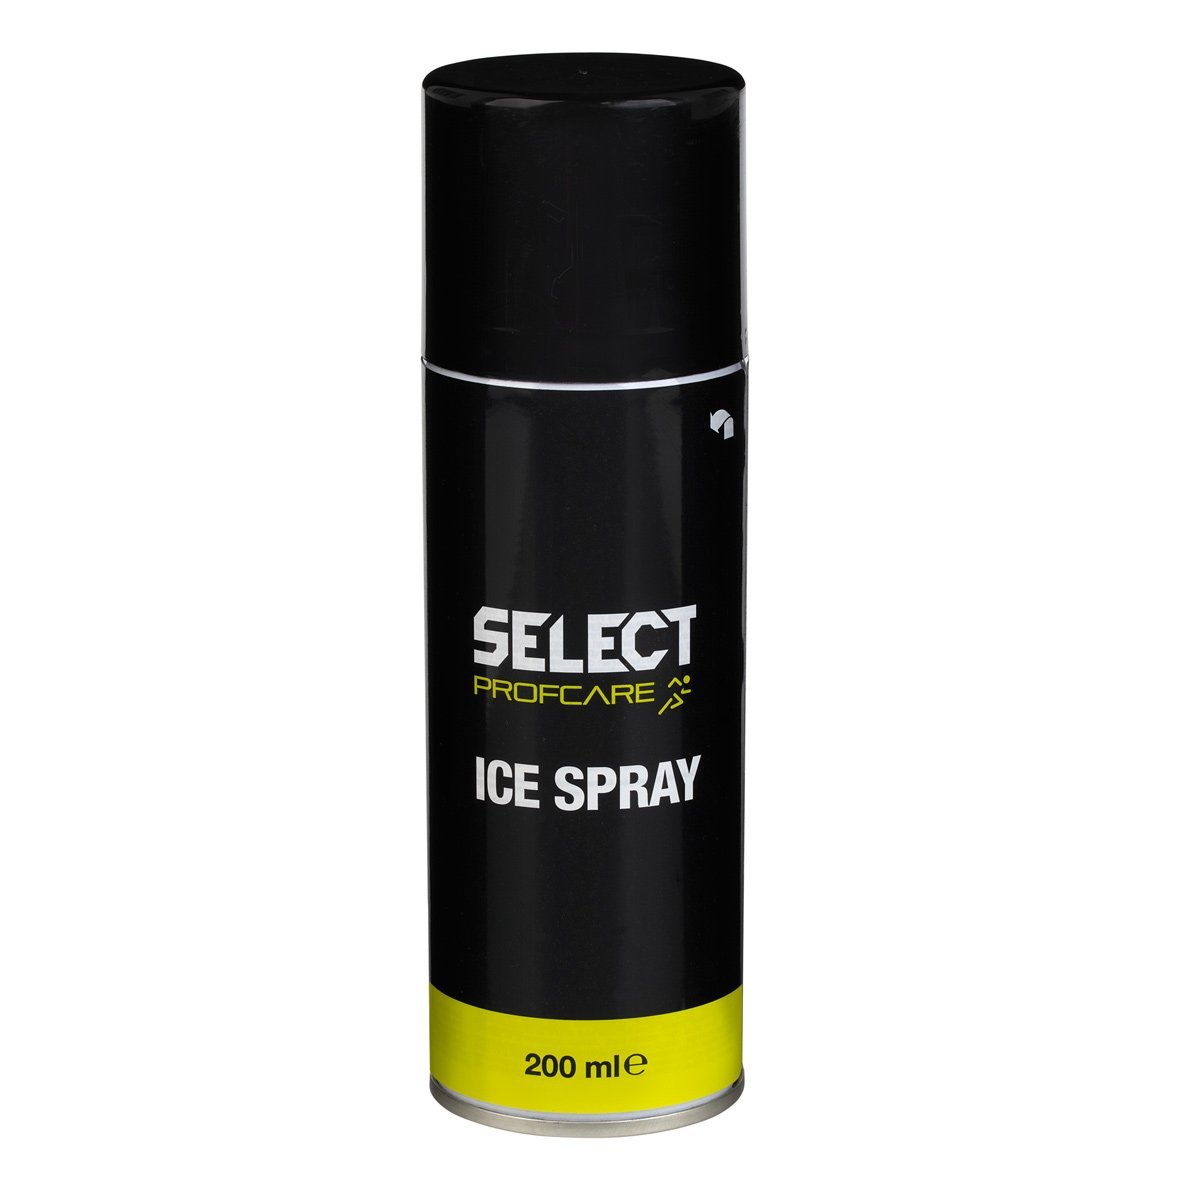 Select Profcare Ice Spray 200ml thumbnail